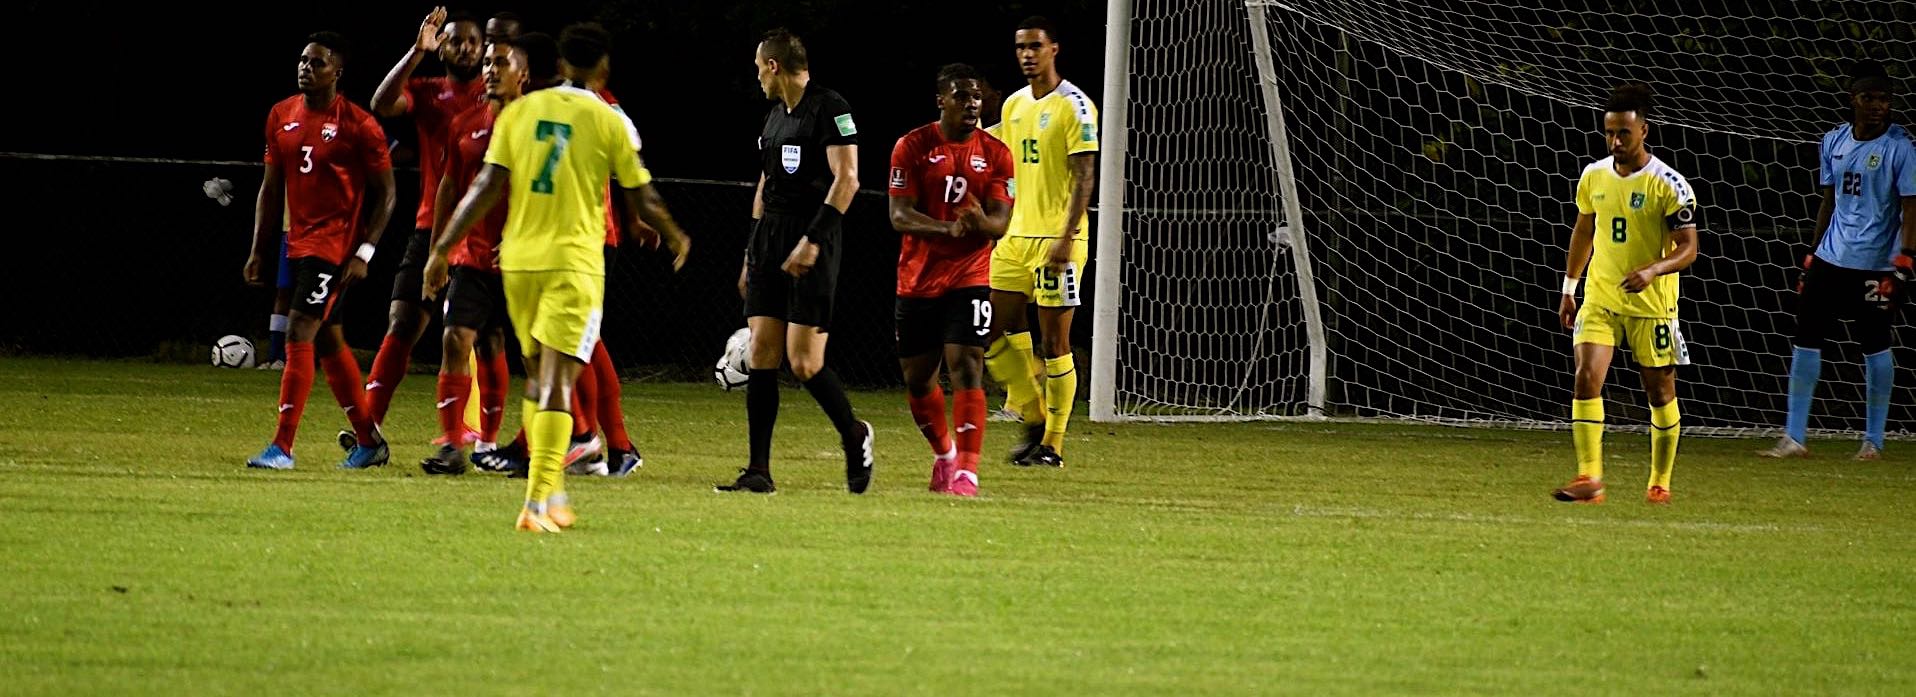 Debudant attacker Daniel Phillips #19 in action vs Guyana at yesterday's World Cup qualifying match against Guyana - Photo courtesy: TTFA Media